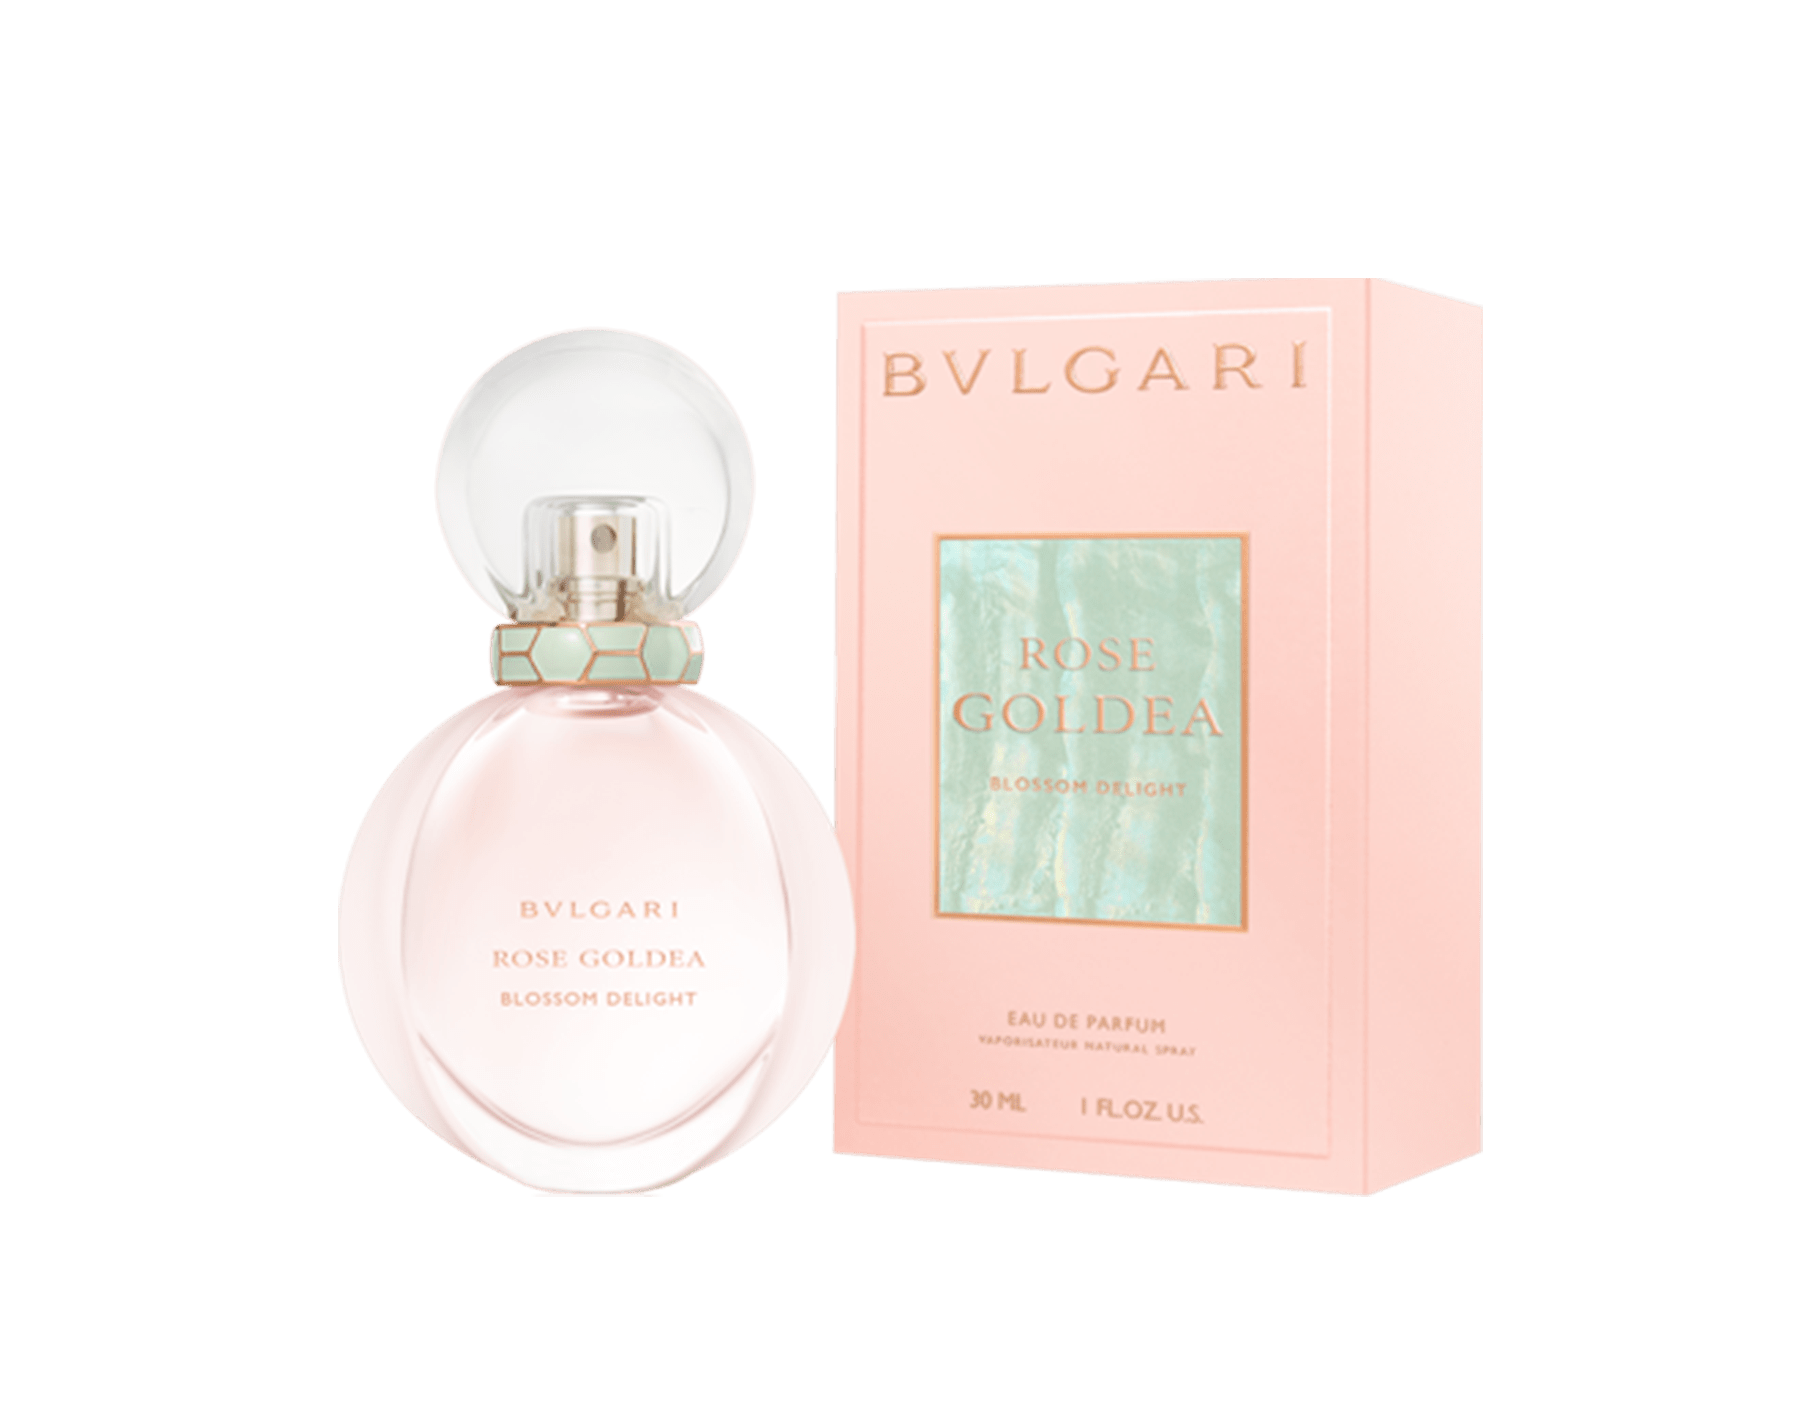 bvlgari rose parfum